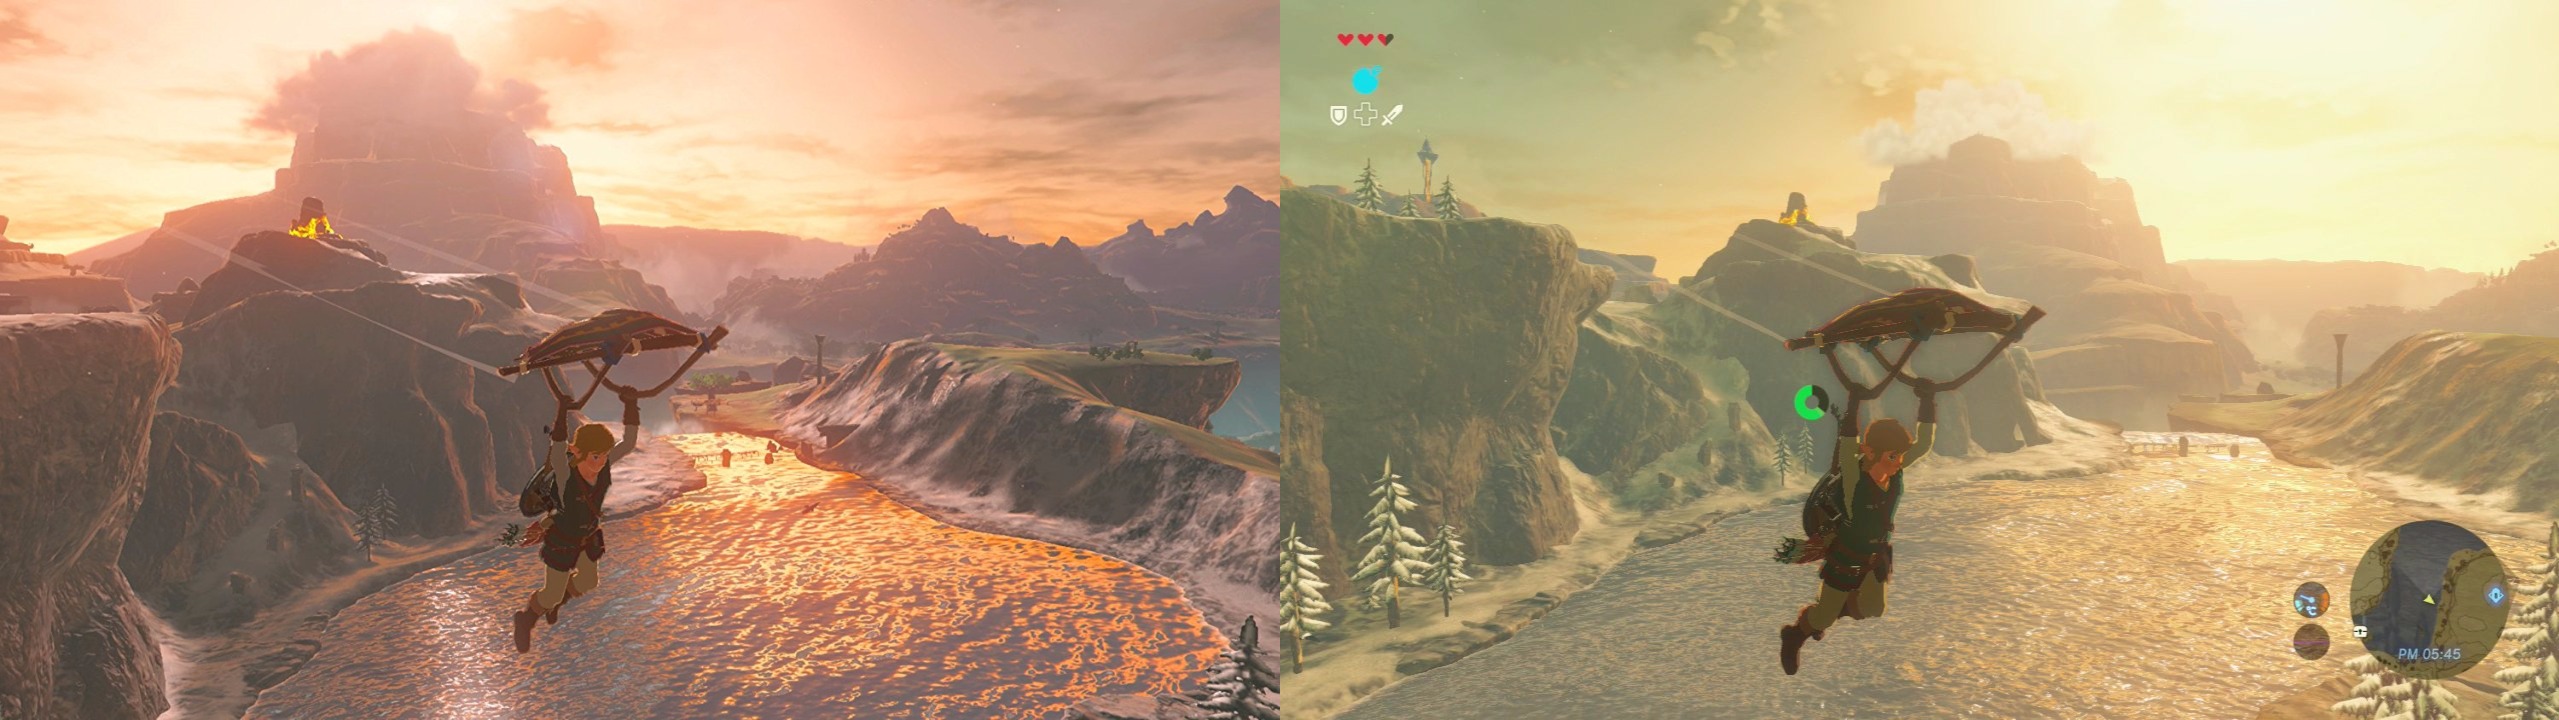 Zelda Breath Of The Wild Switch Vs Wii U Screenshot Comparisons Nintendo Everything